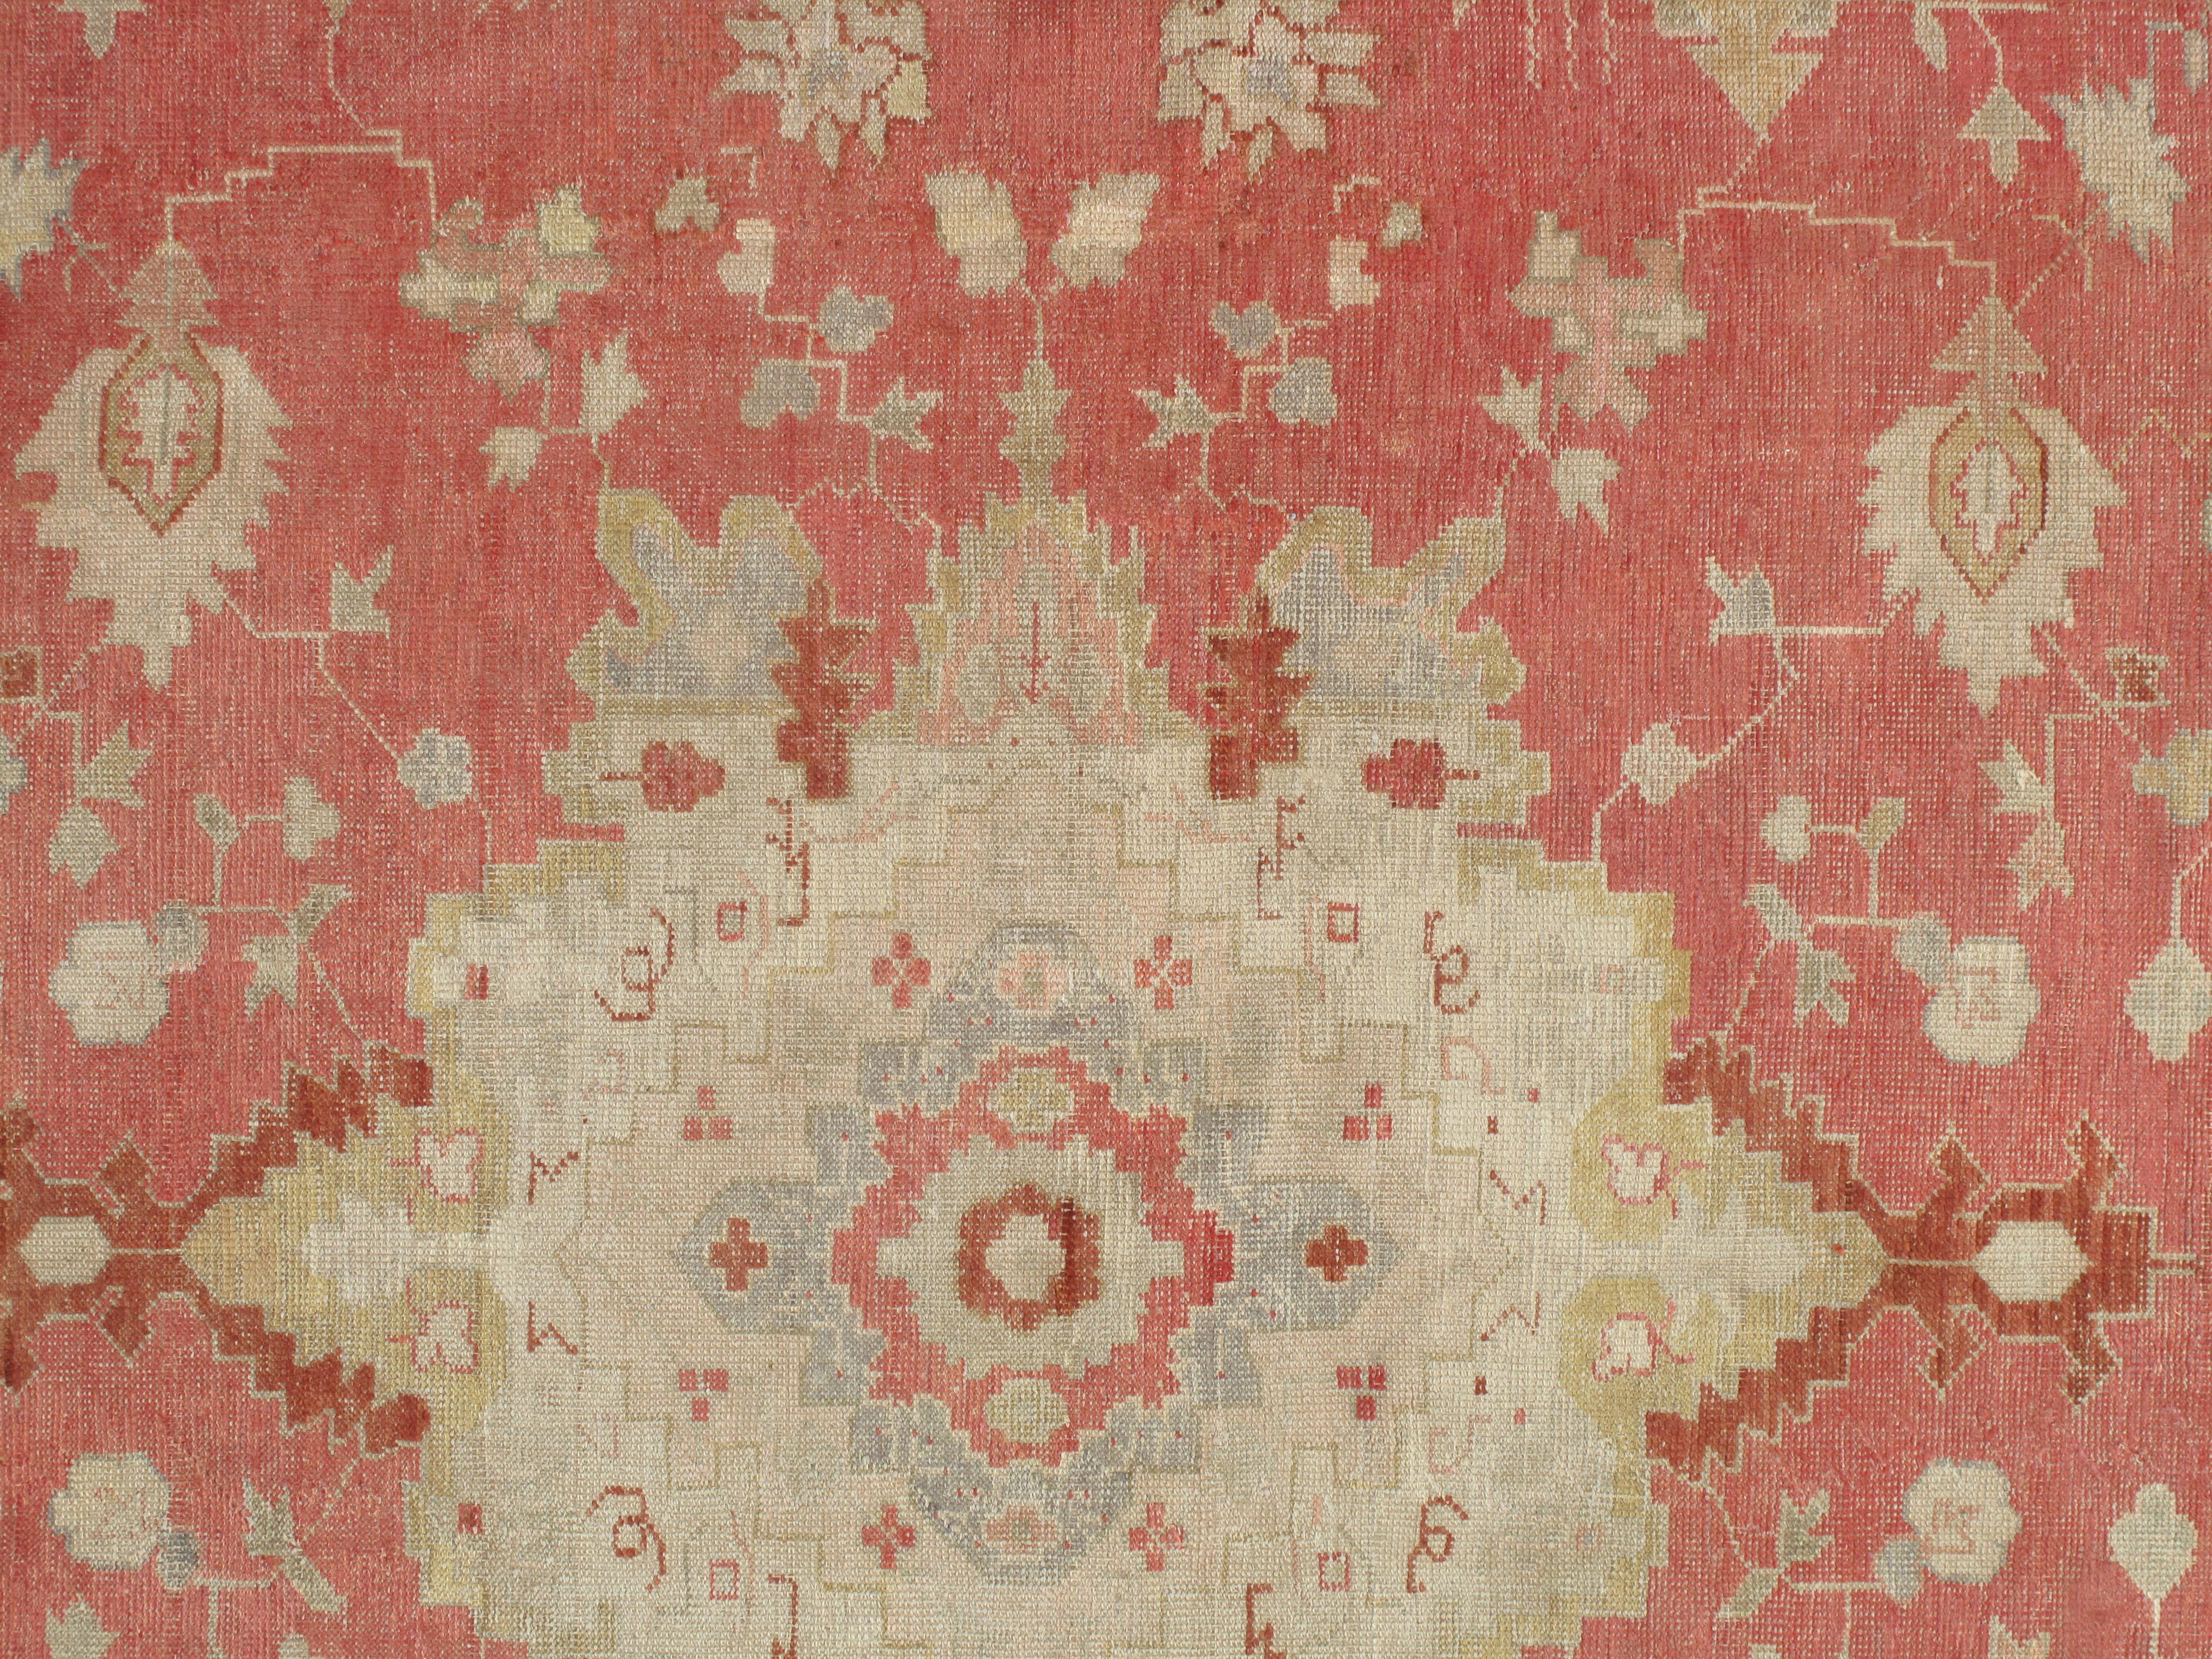 Antique Oushak Carpet, Handmade Turkish Oriental Rug, Beige, Coral, Soft Colors For Sale 1